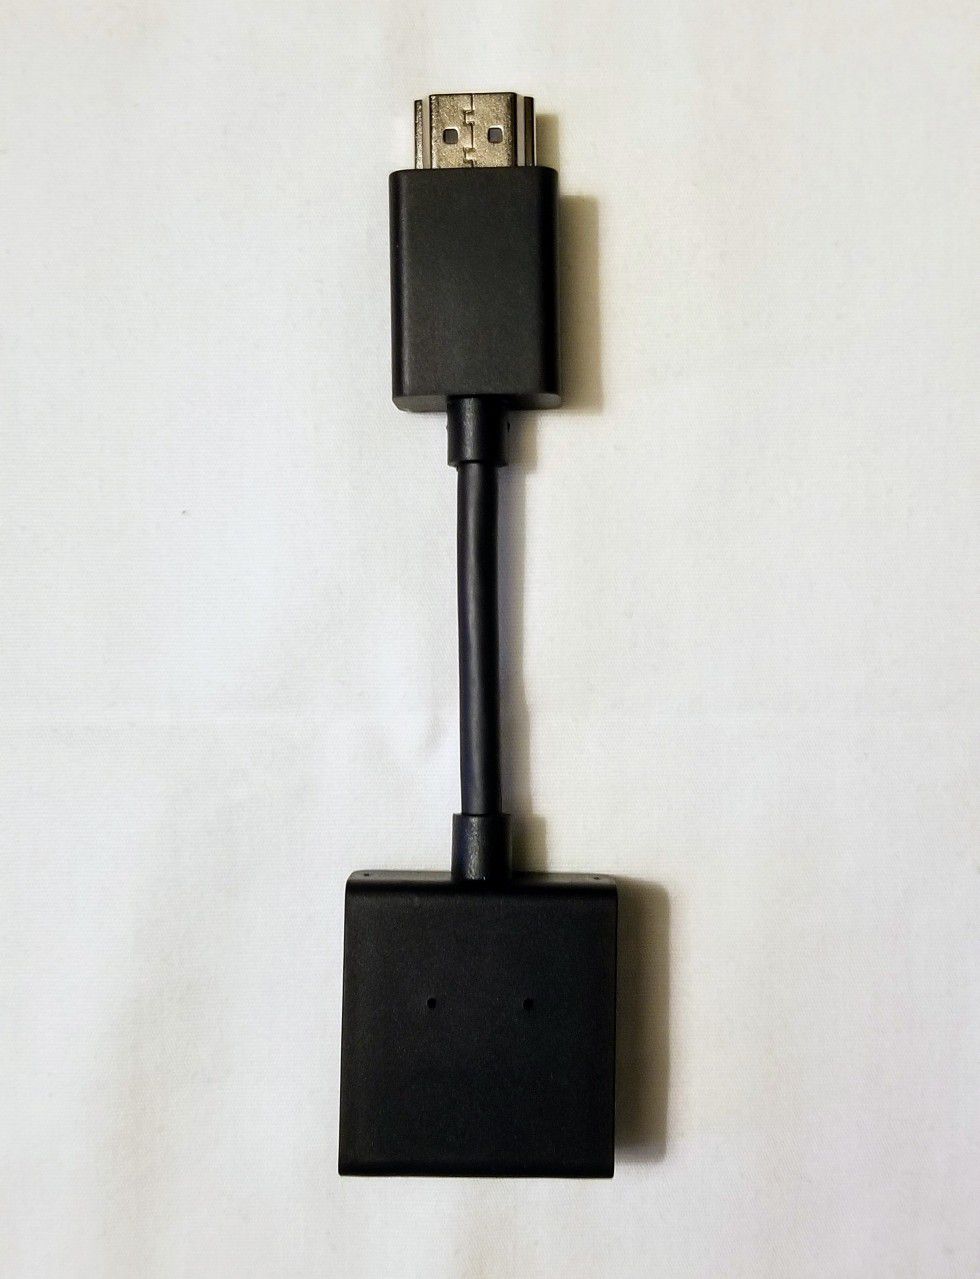 HDMI Extender Cable for Google Chromecast, Roku, Amazon Firestick *NEW*